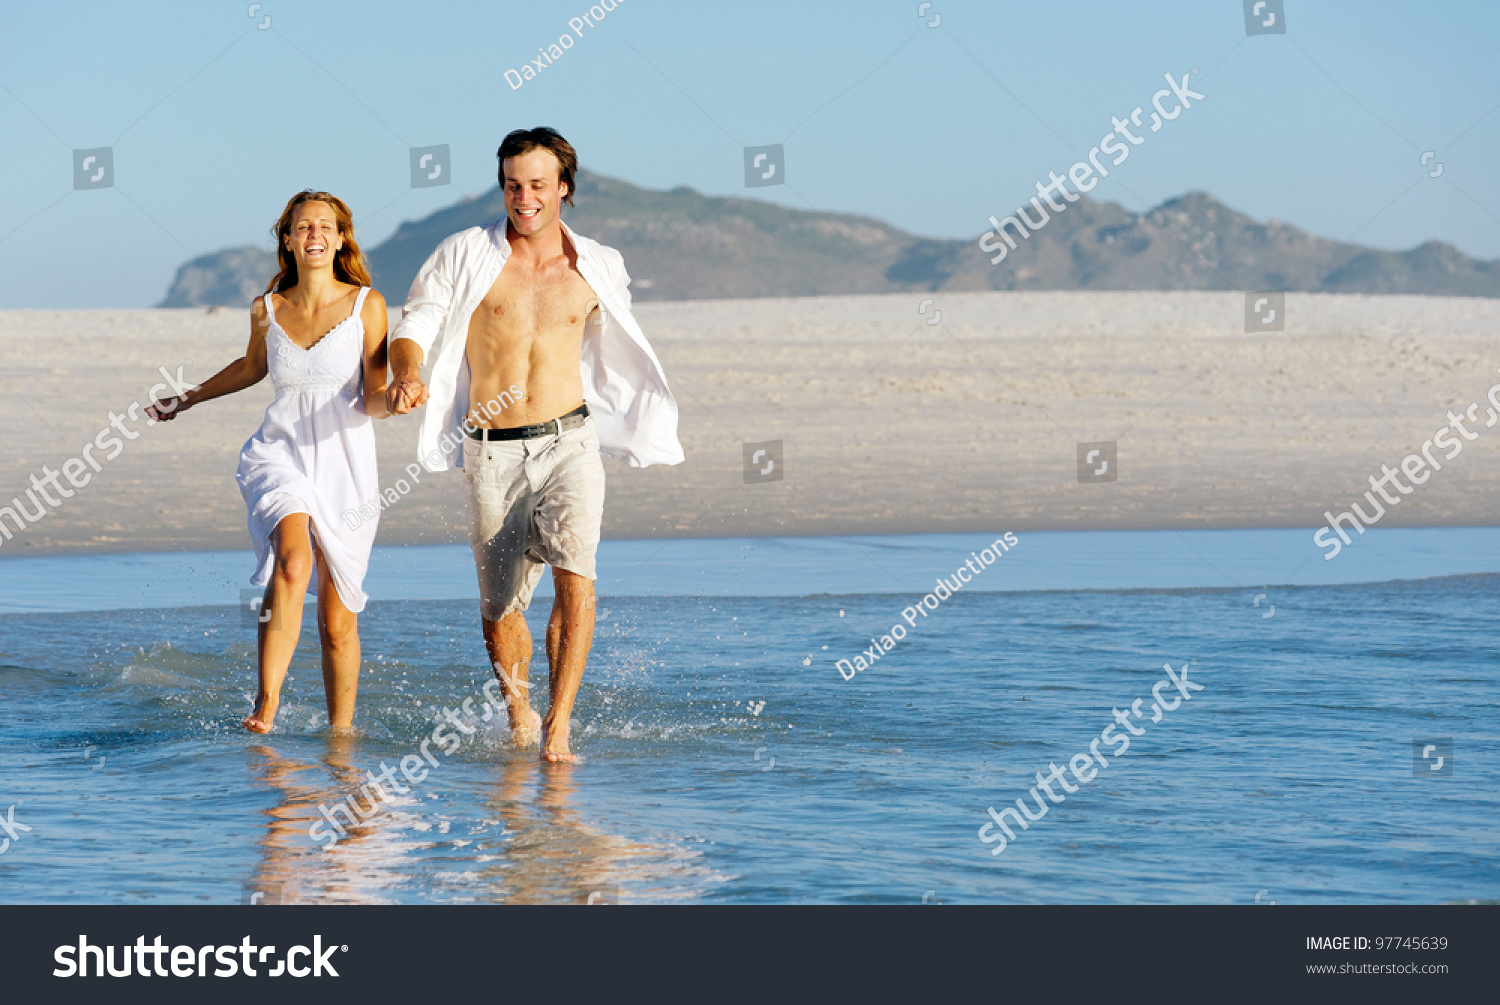 Summer Beach Love Couple Run Through The Shallow Water Splashing And